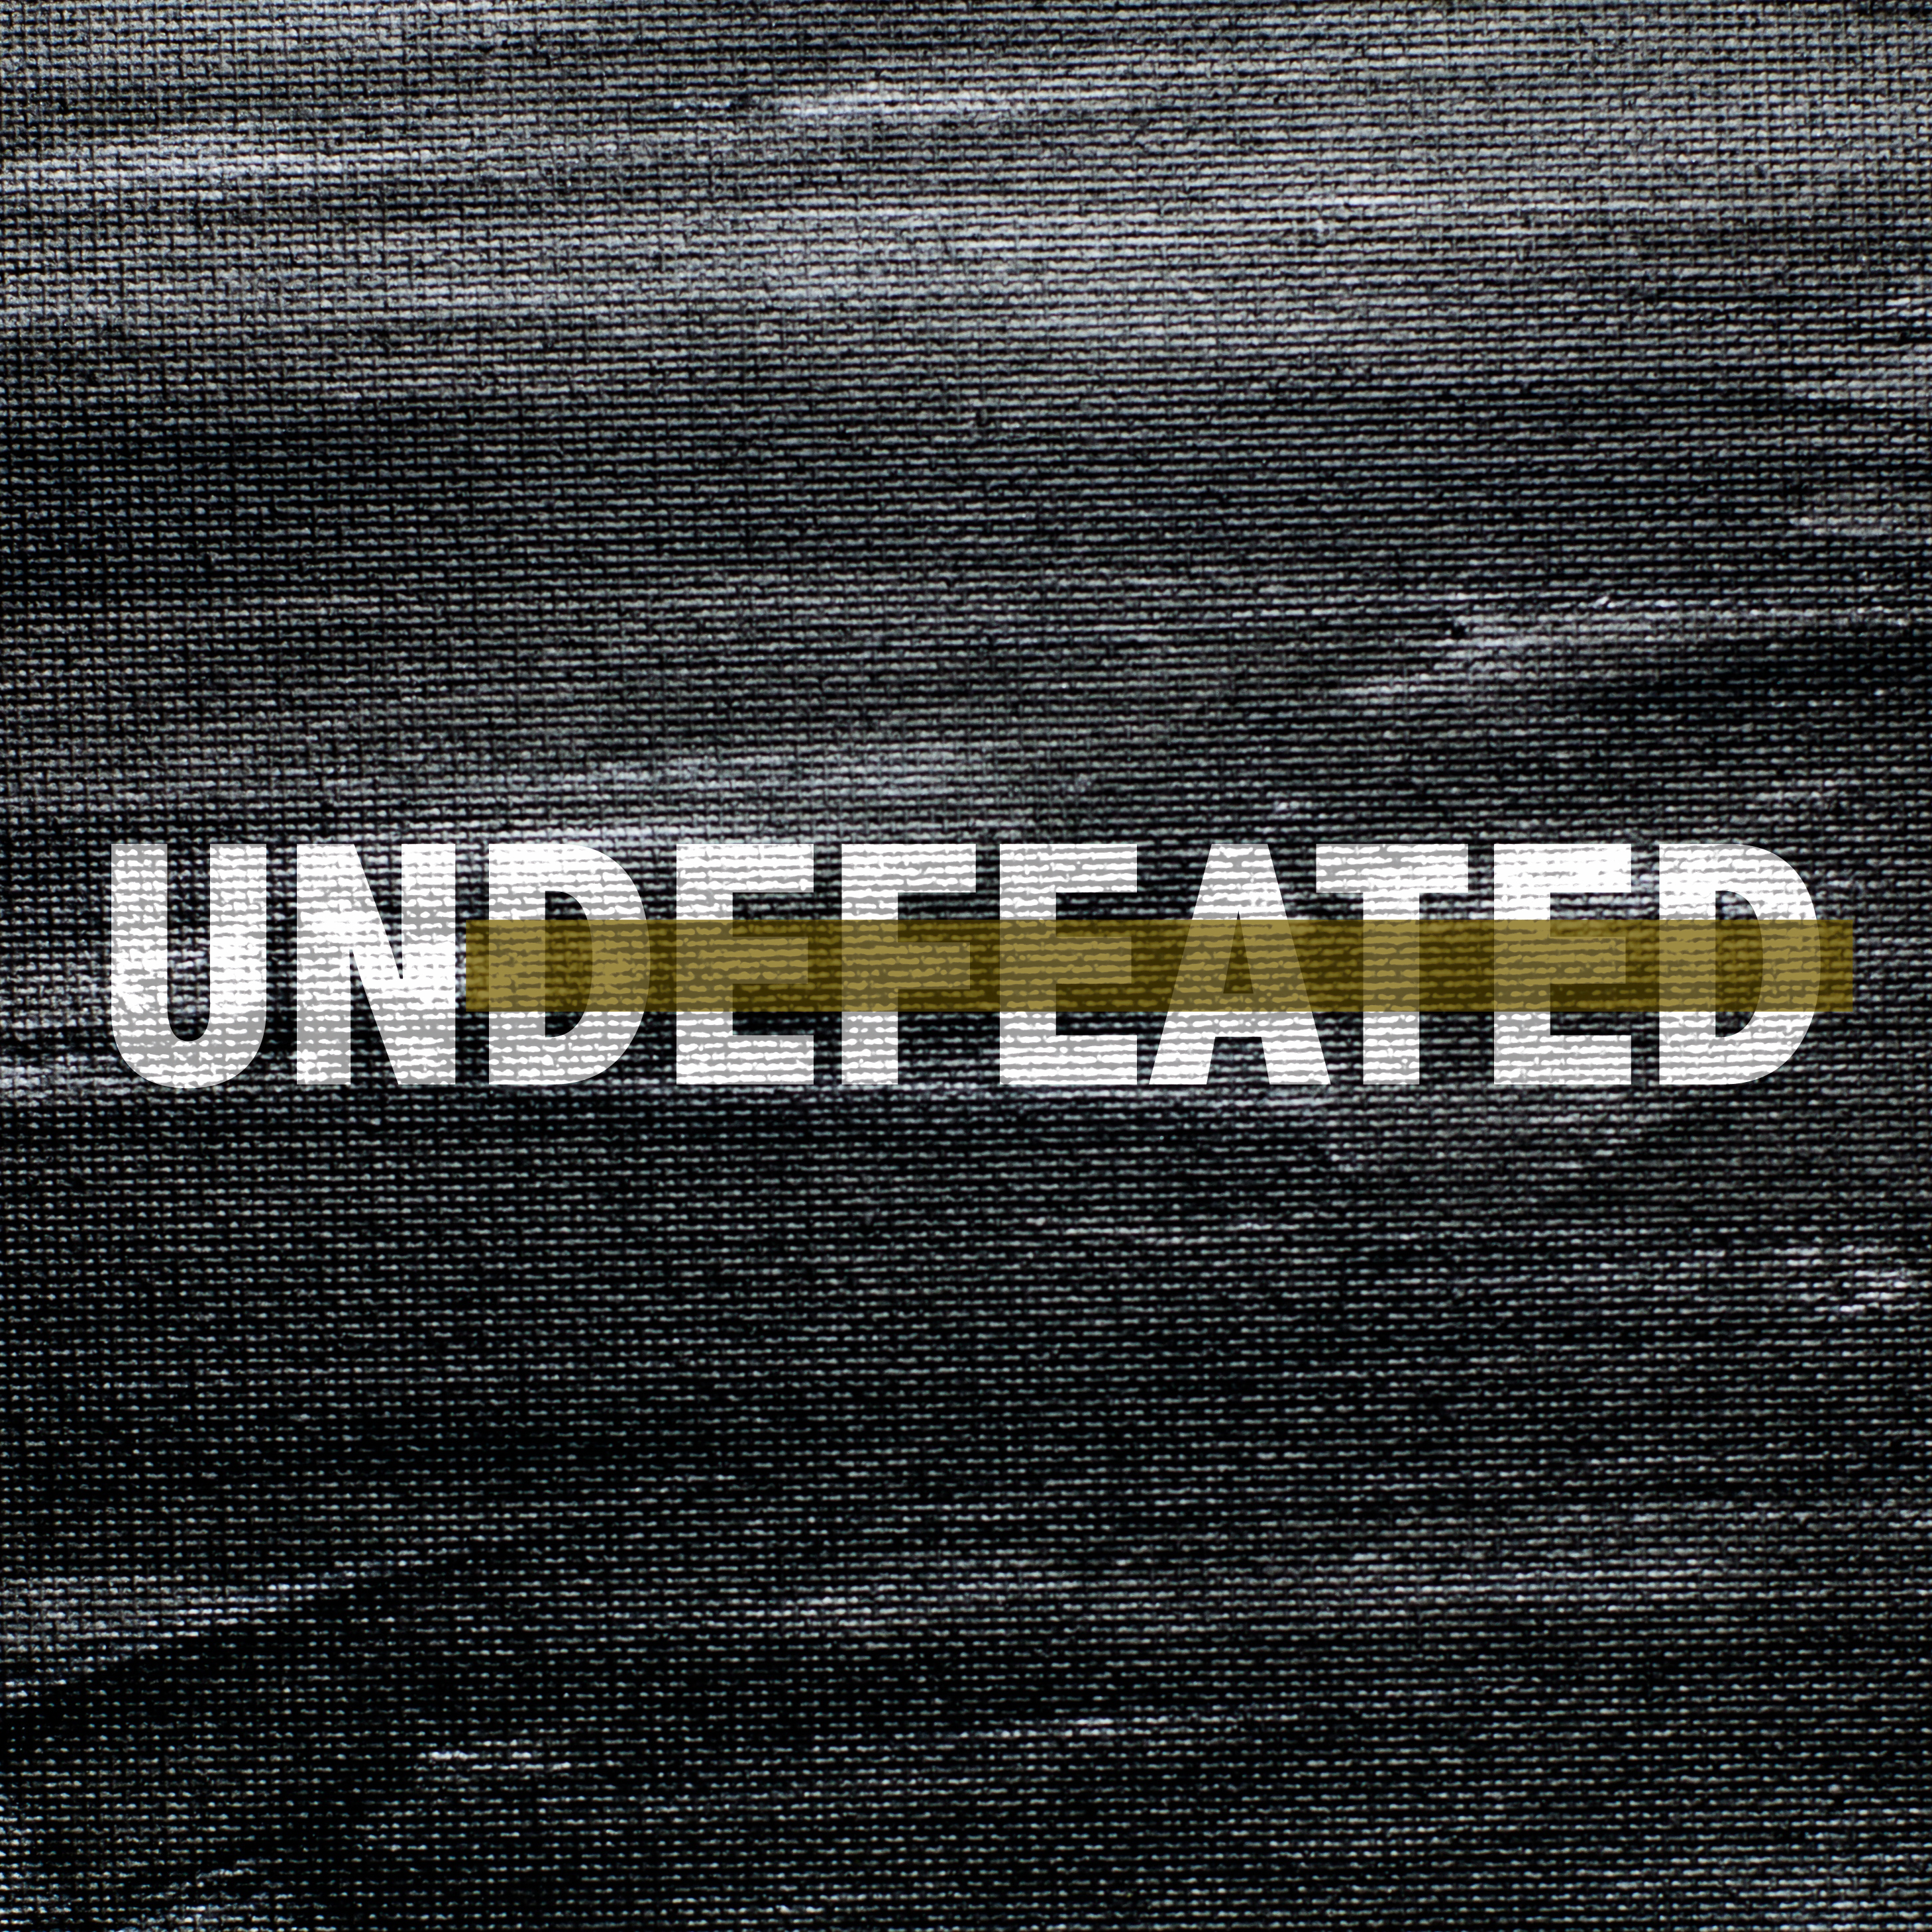 Undefeated – Week Three